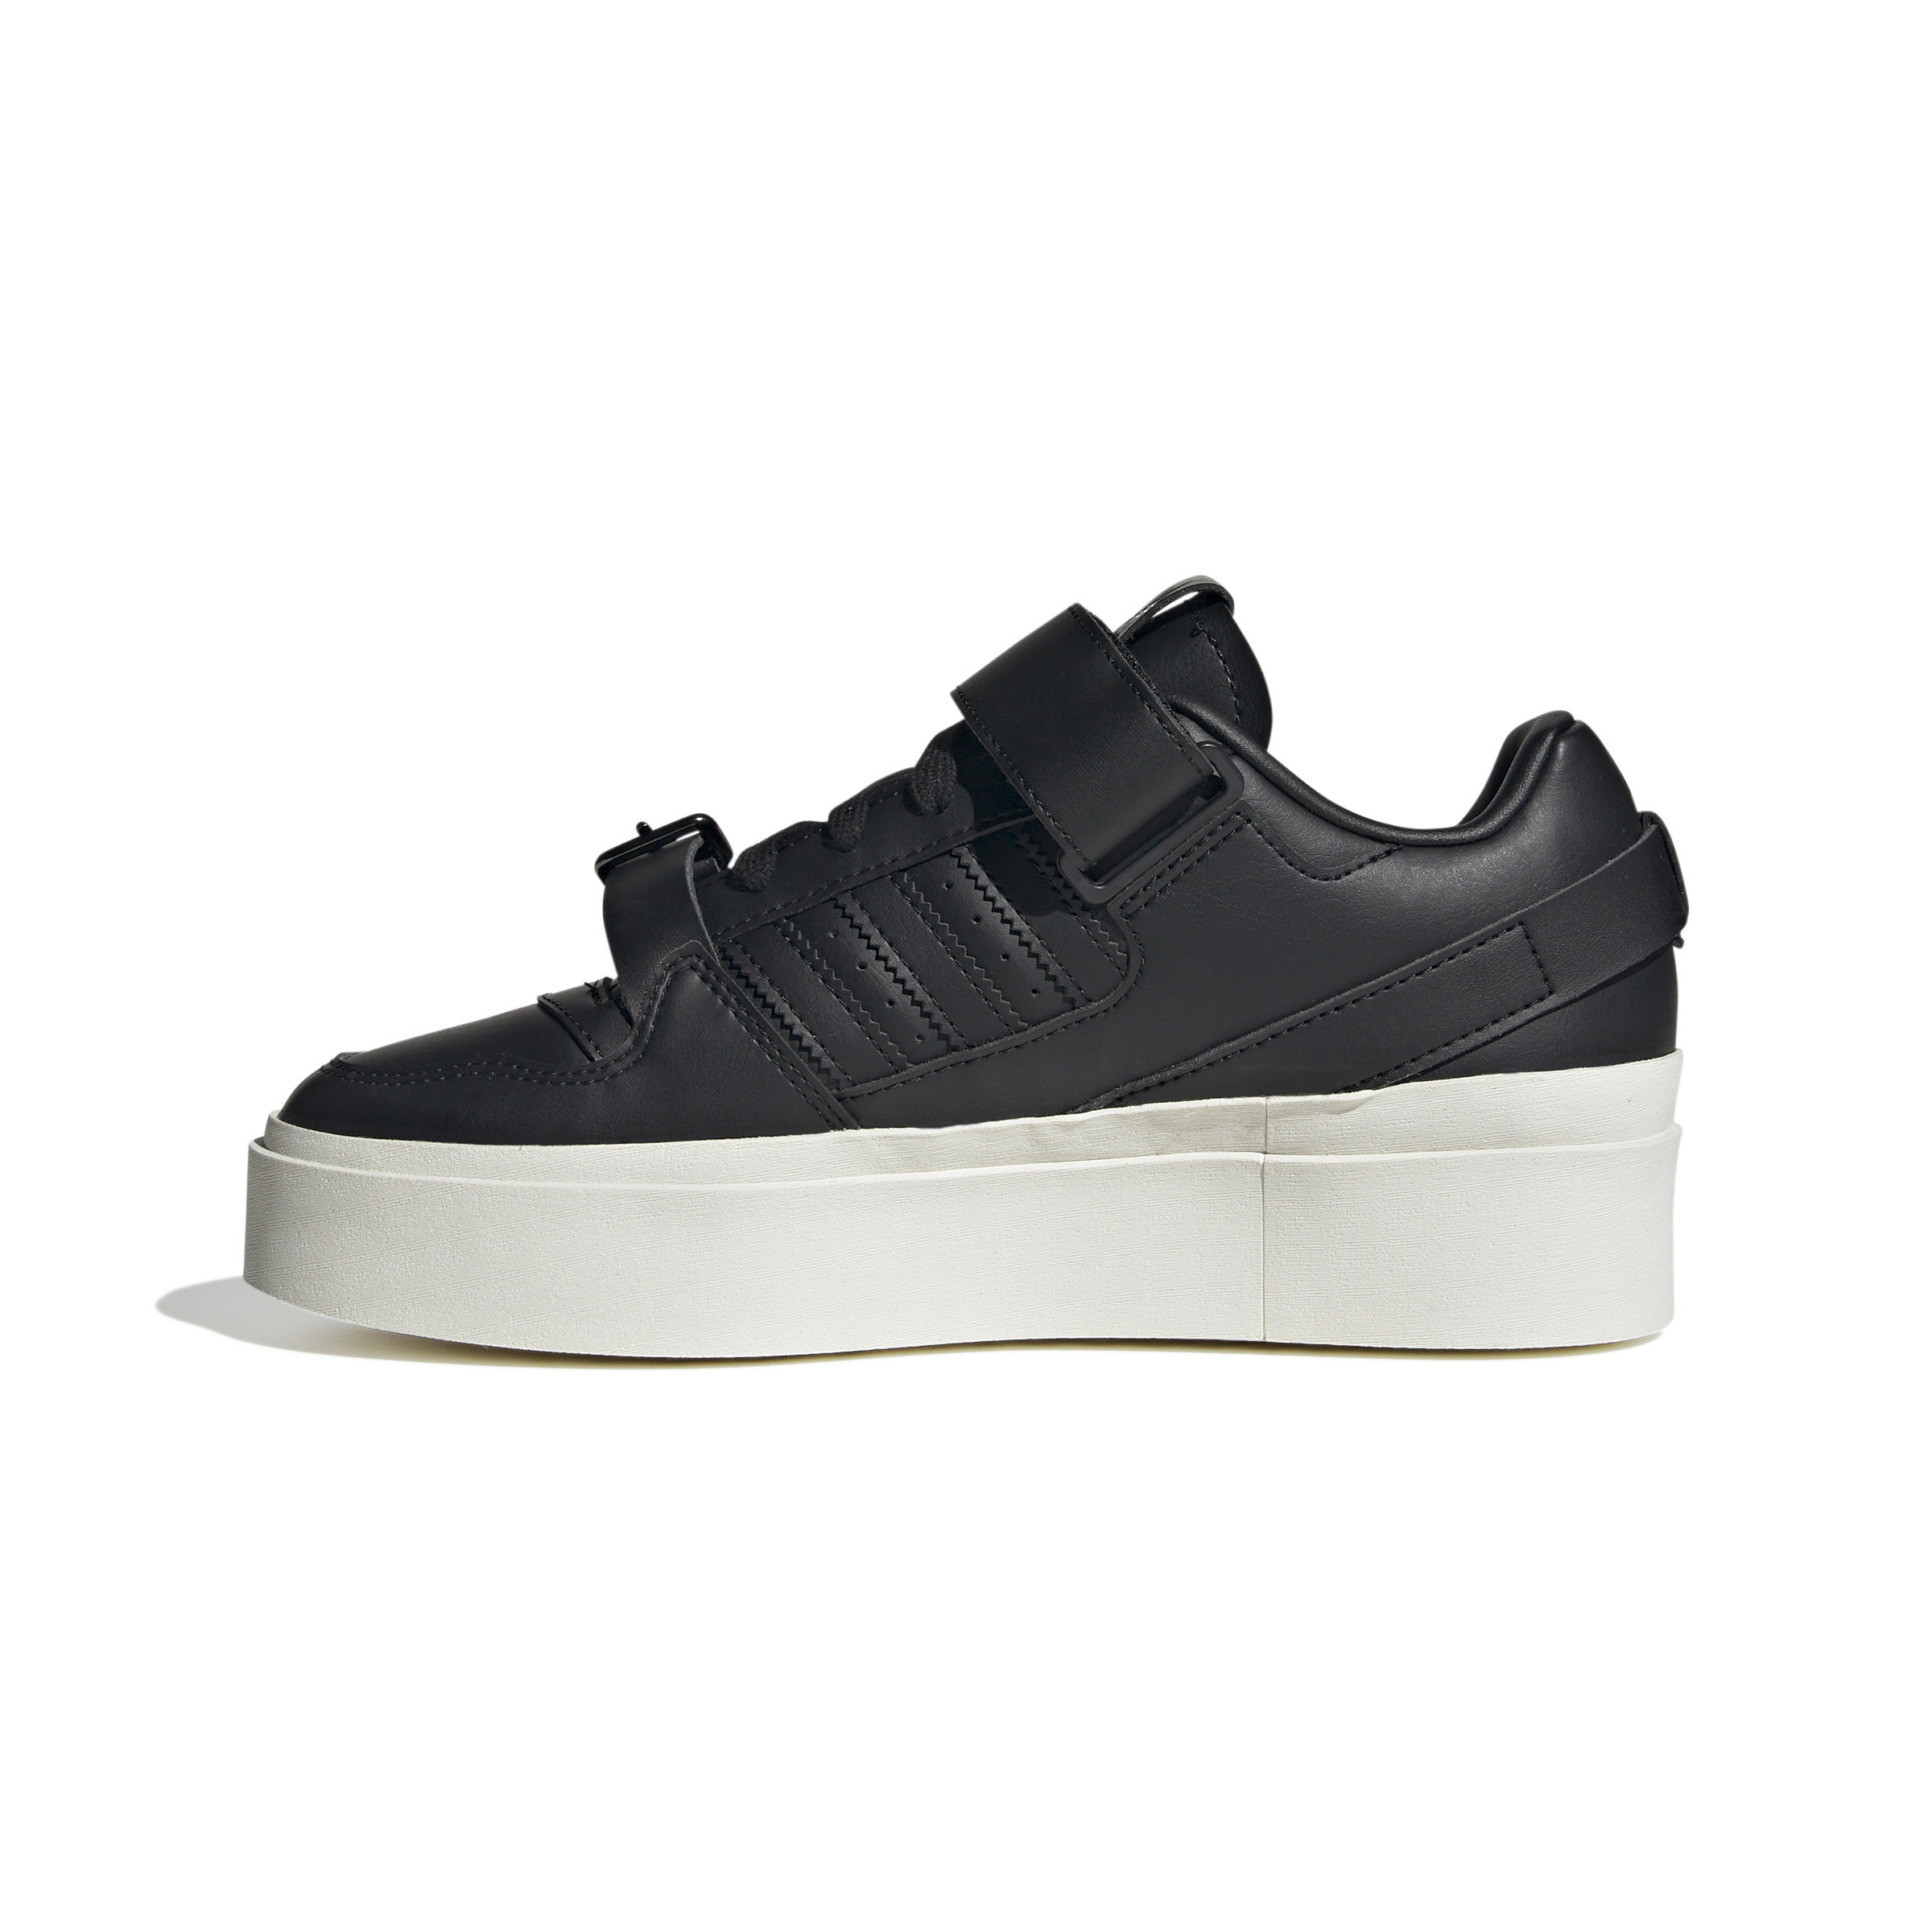 Adidas - Forum Bonega shoes, Black, large image number 5